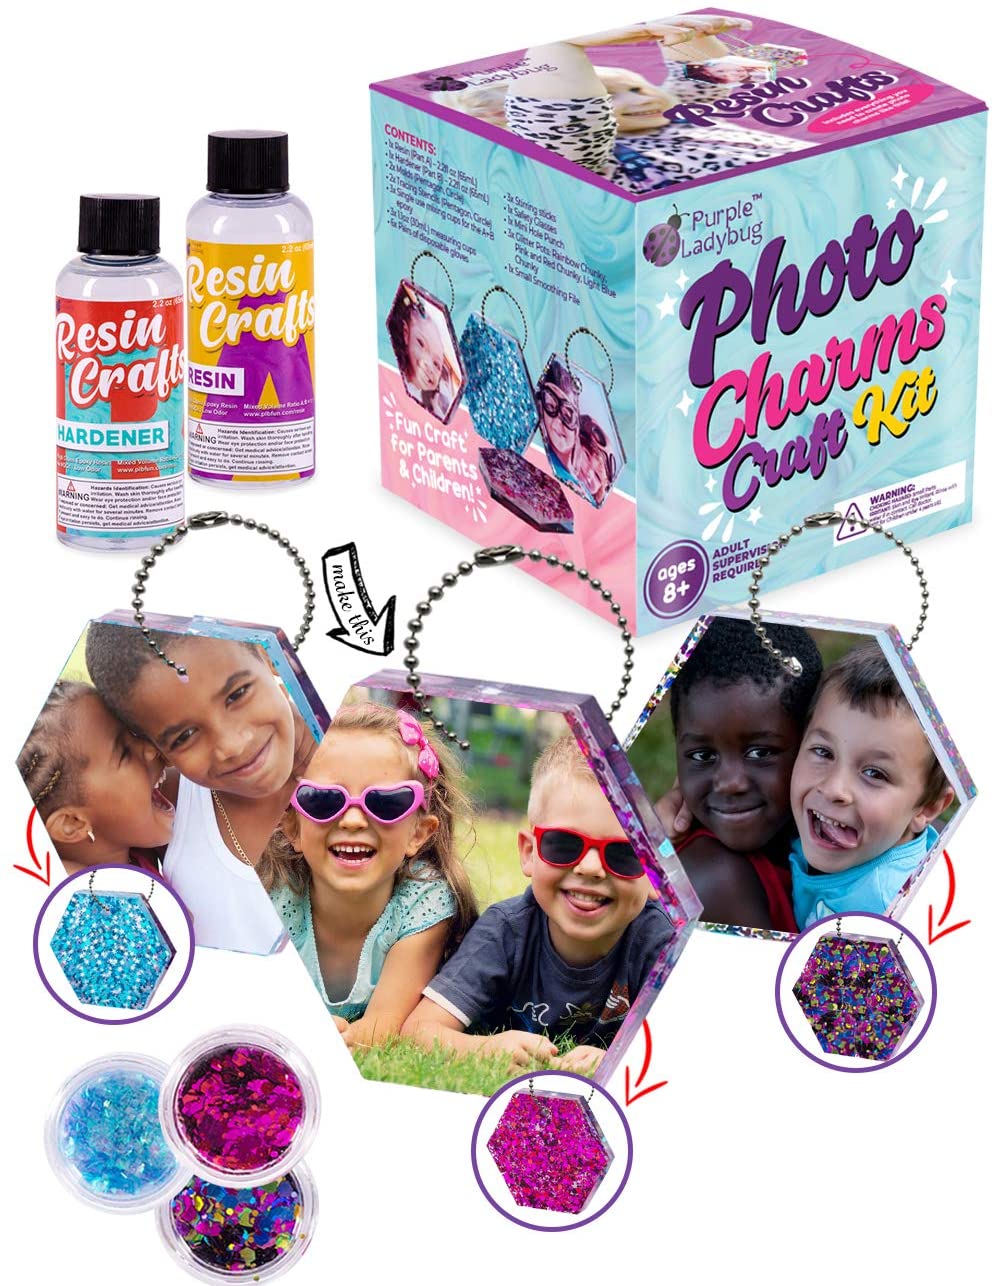 PURPLE LADYBUG Photo Charm Resin Starter Kit - Teenage Girls Gifts Ideas,  Gift for Teen Girl - Arts